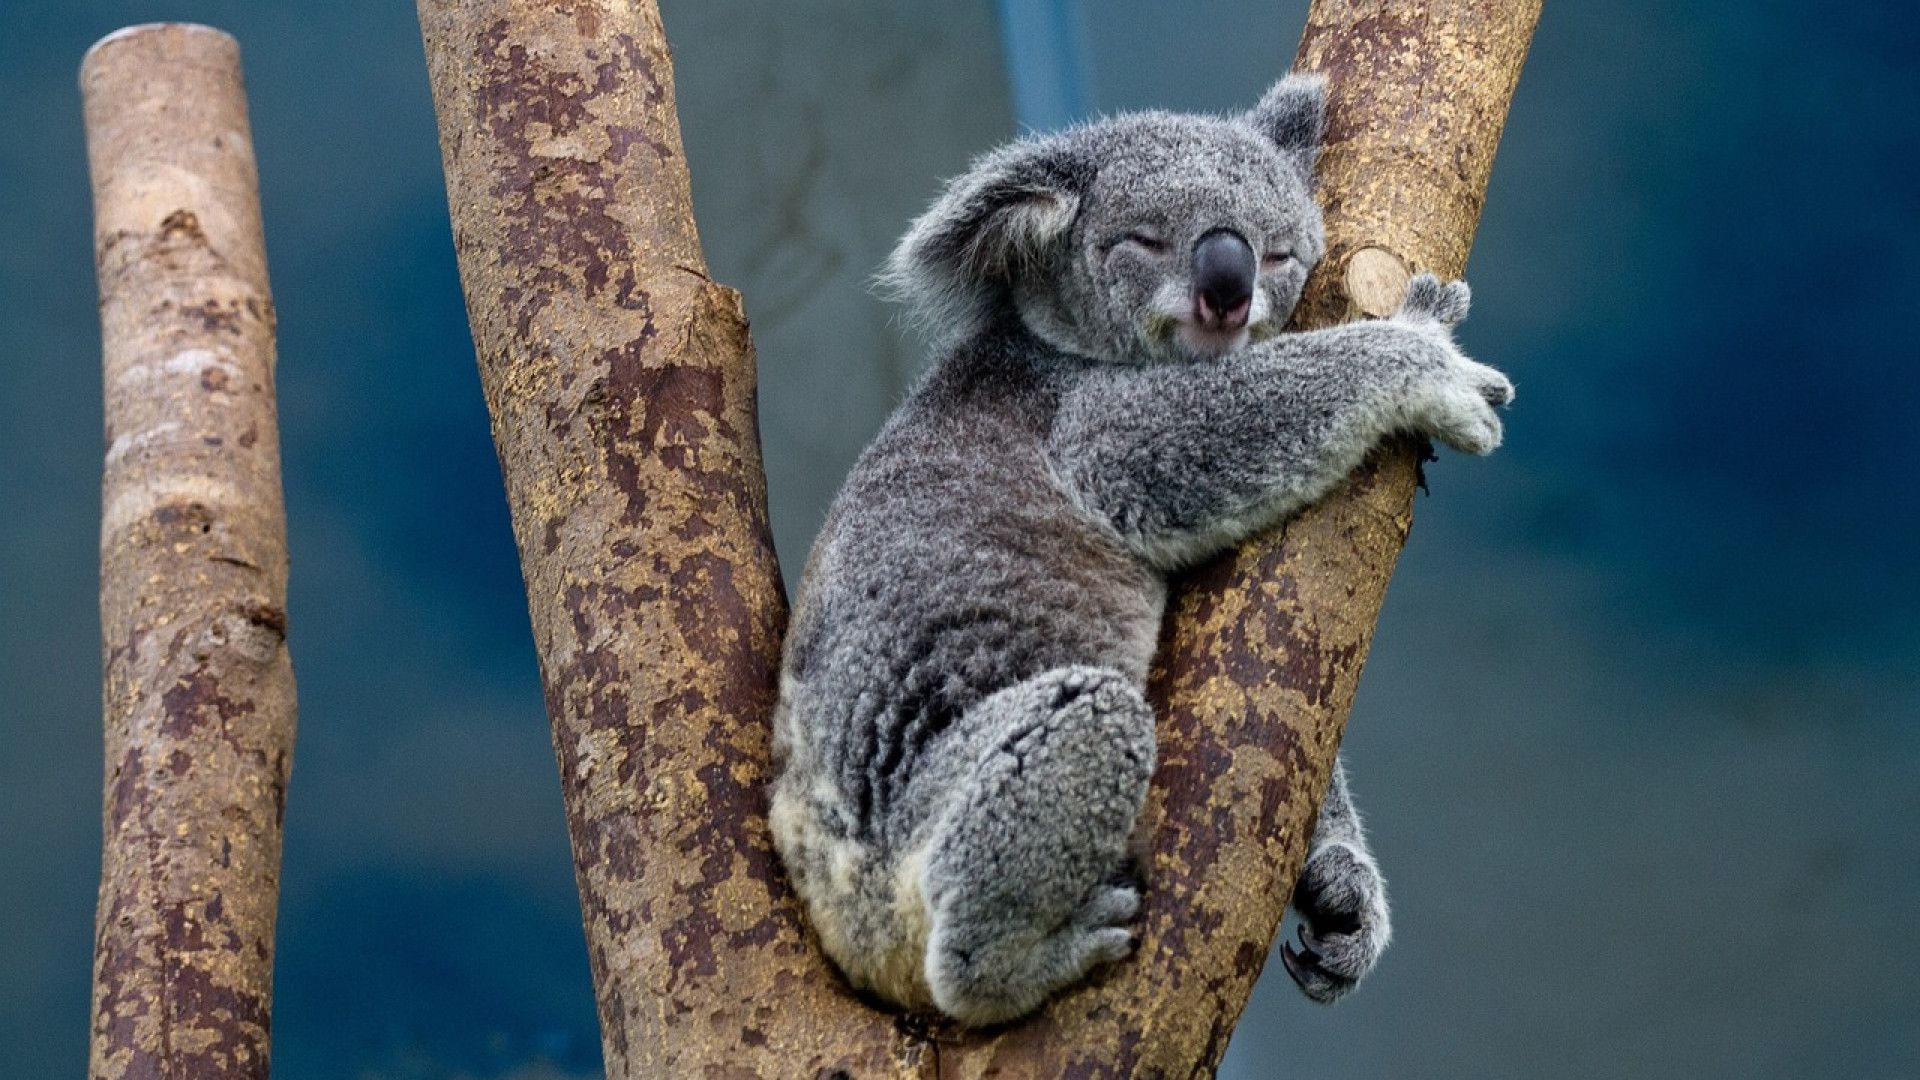 Koala On The Tree